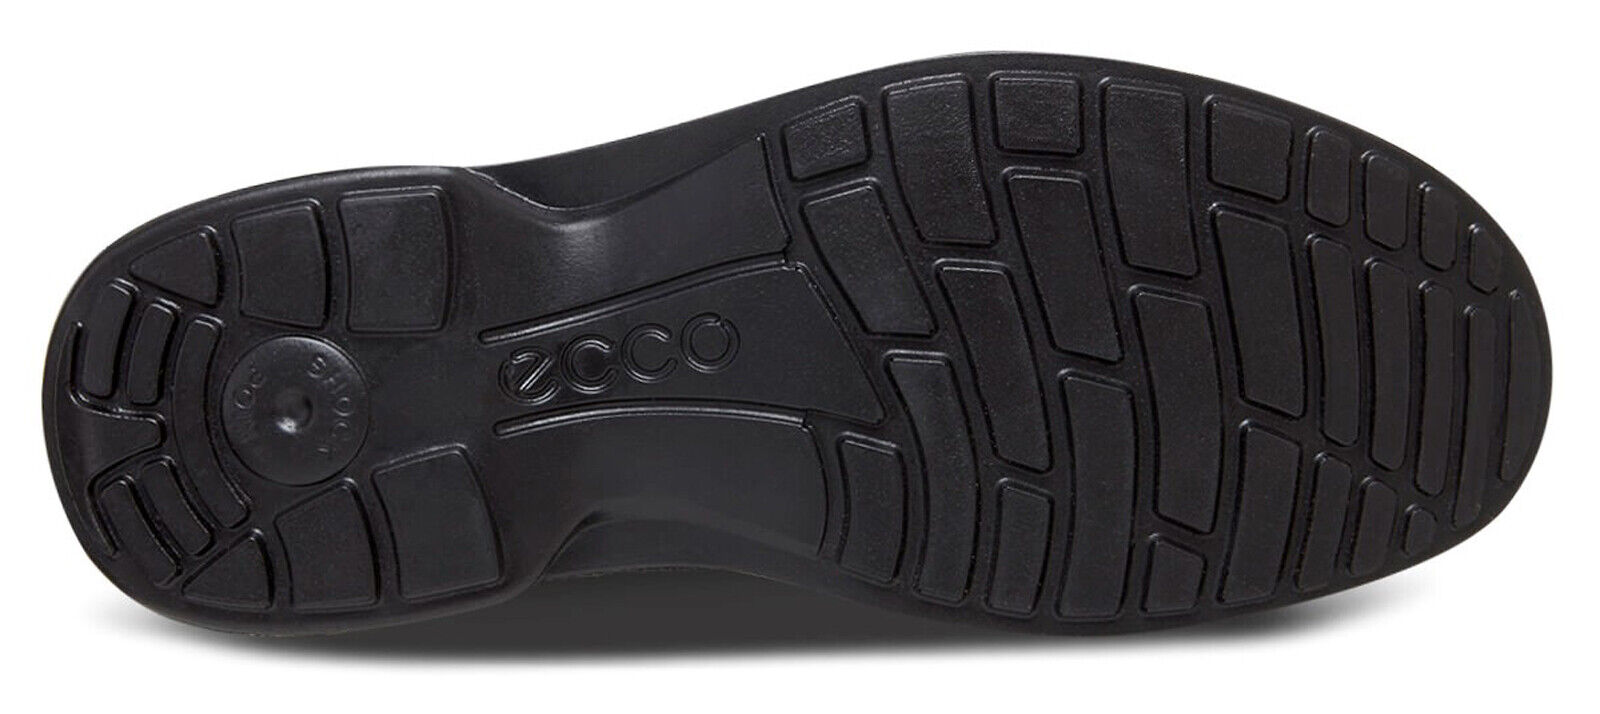 ECCO Mens Derby Shoes Turn GTX Plain Toe Nubuck Leather Lace Up 510174 ...